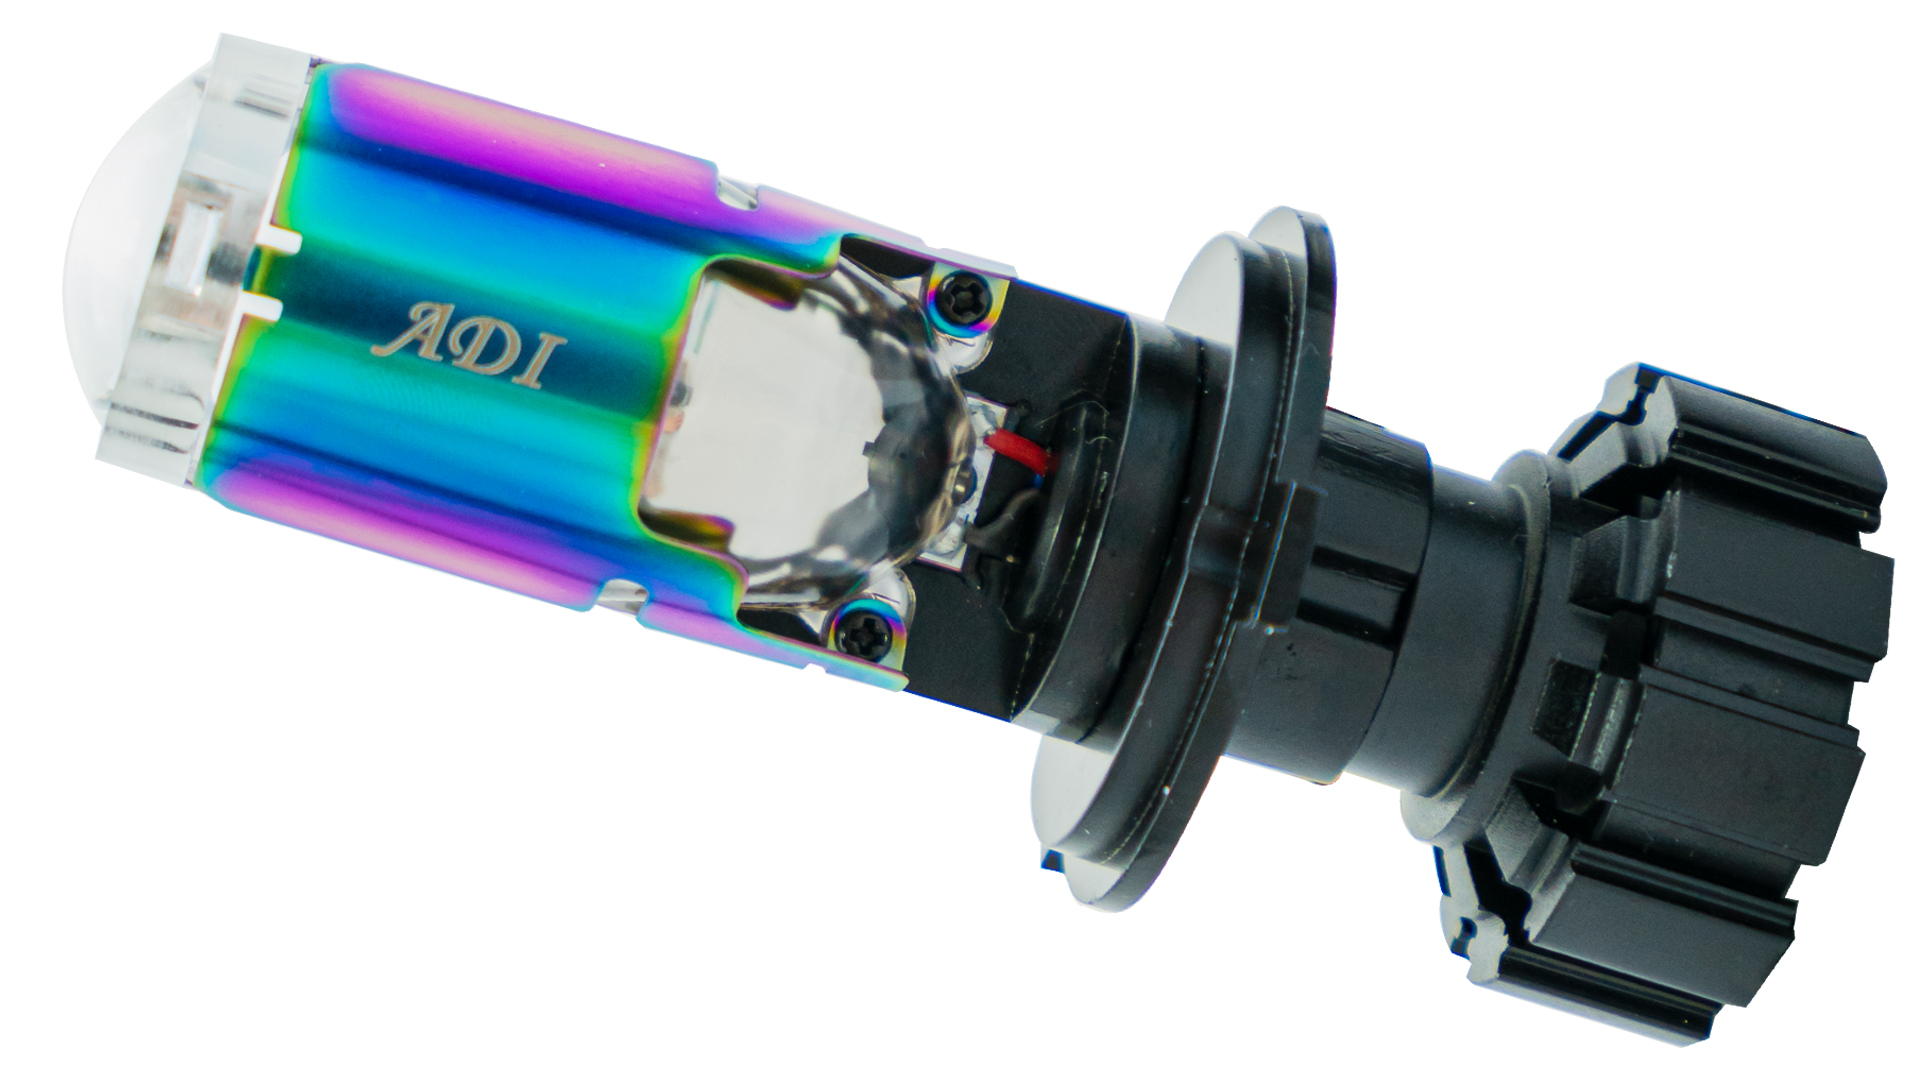 ADI micro lens LED headlamp bulbs